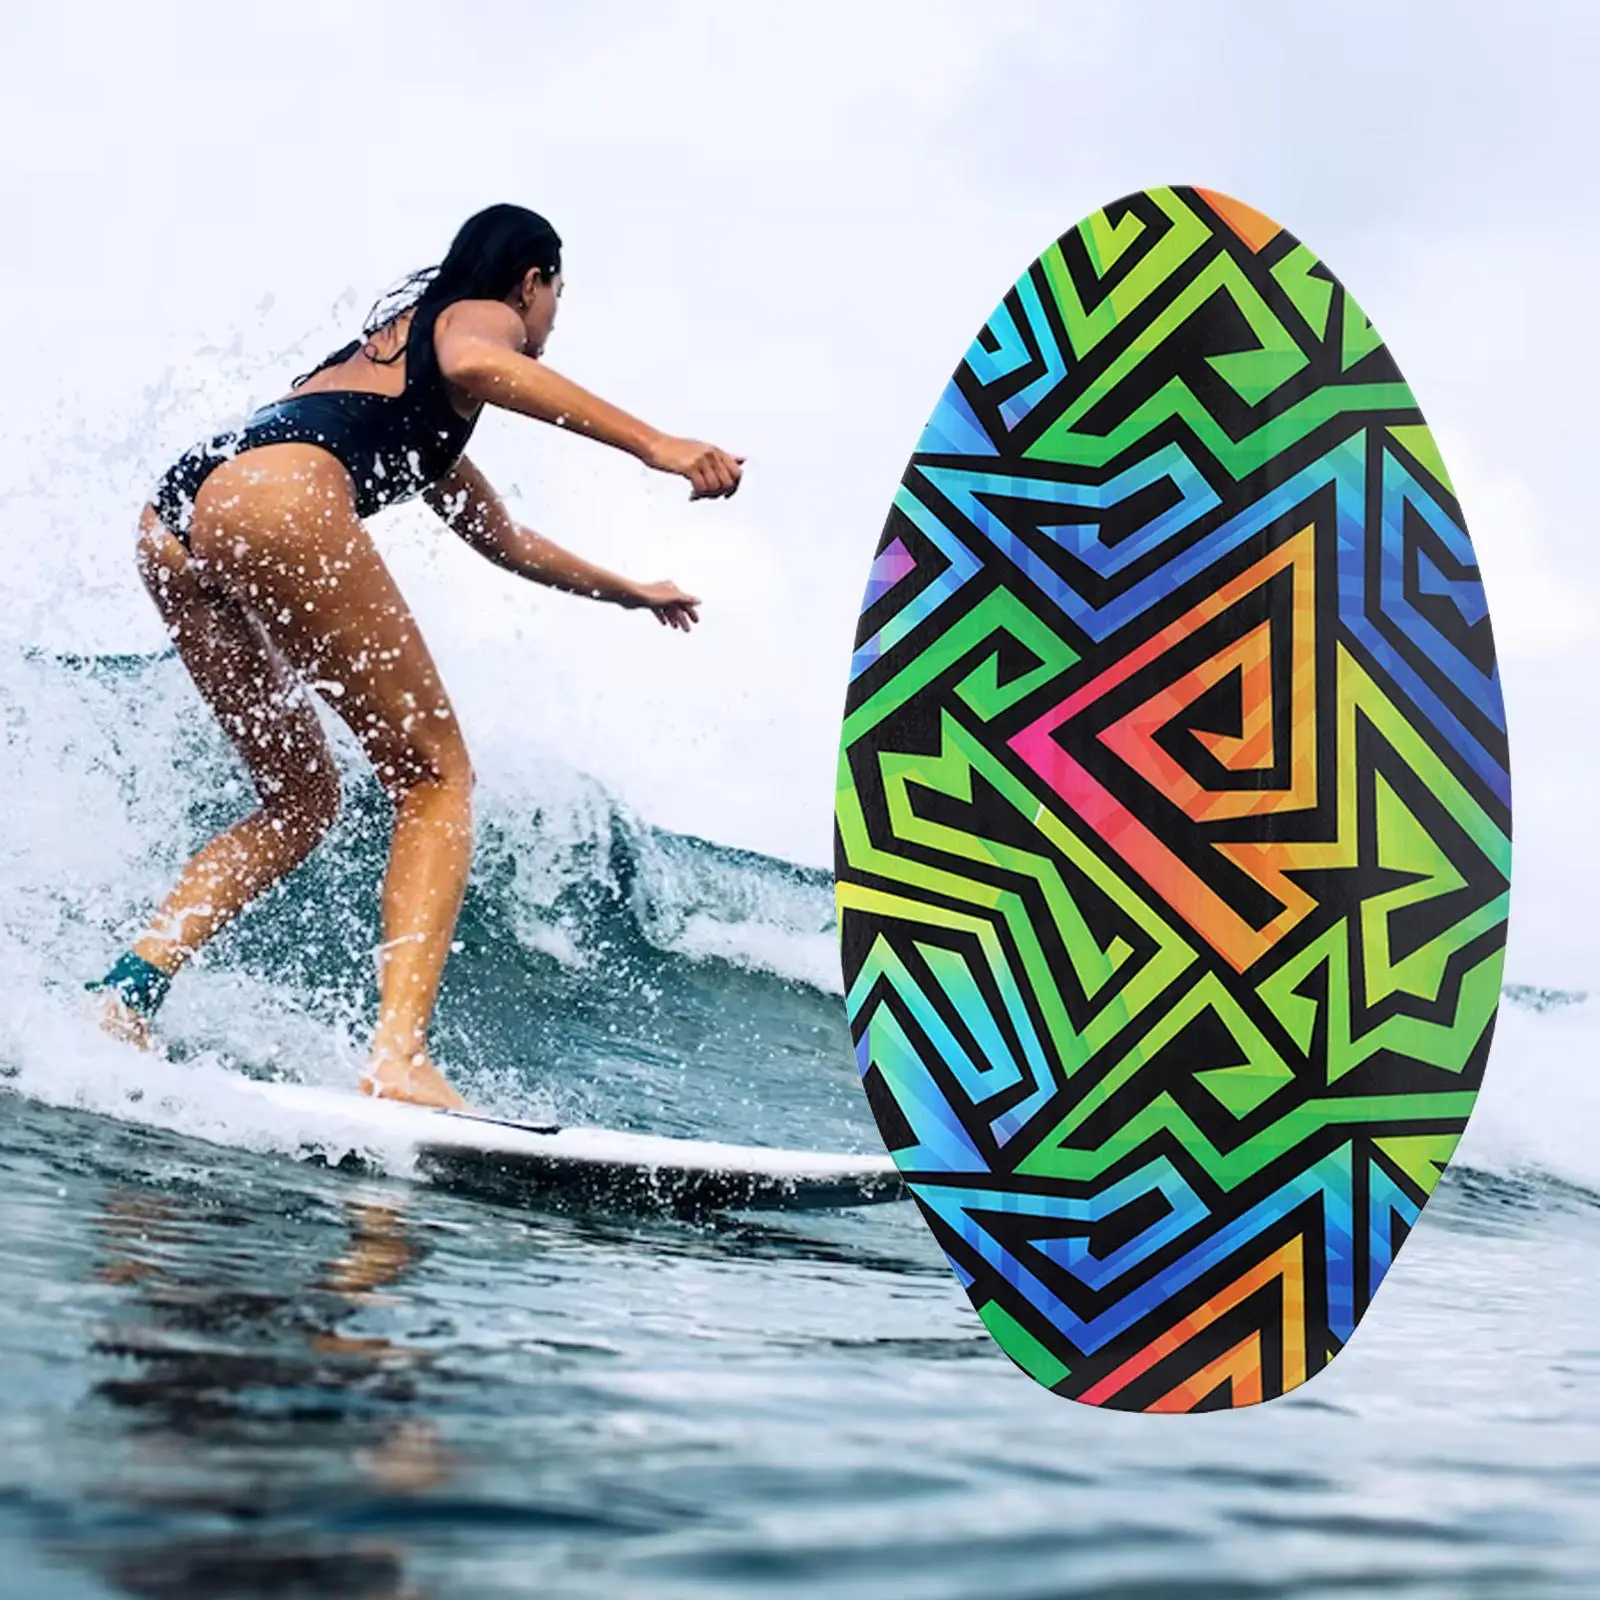 Suring Skimboard Wooden Surfing Skim Boards Beach Water Toys Surfboards for Kids Adults Teens Men Women Water Sports